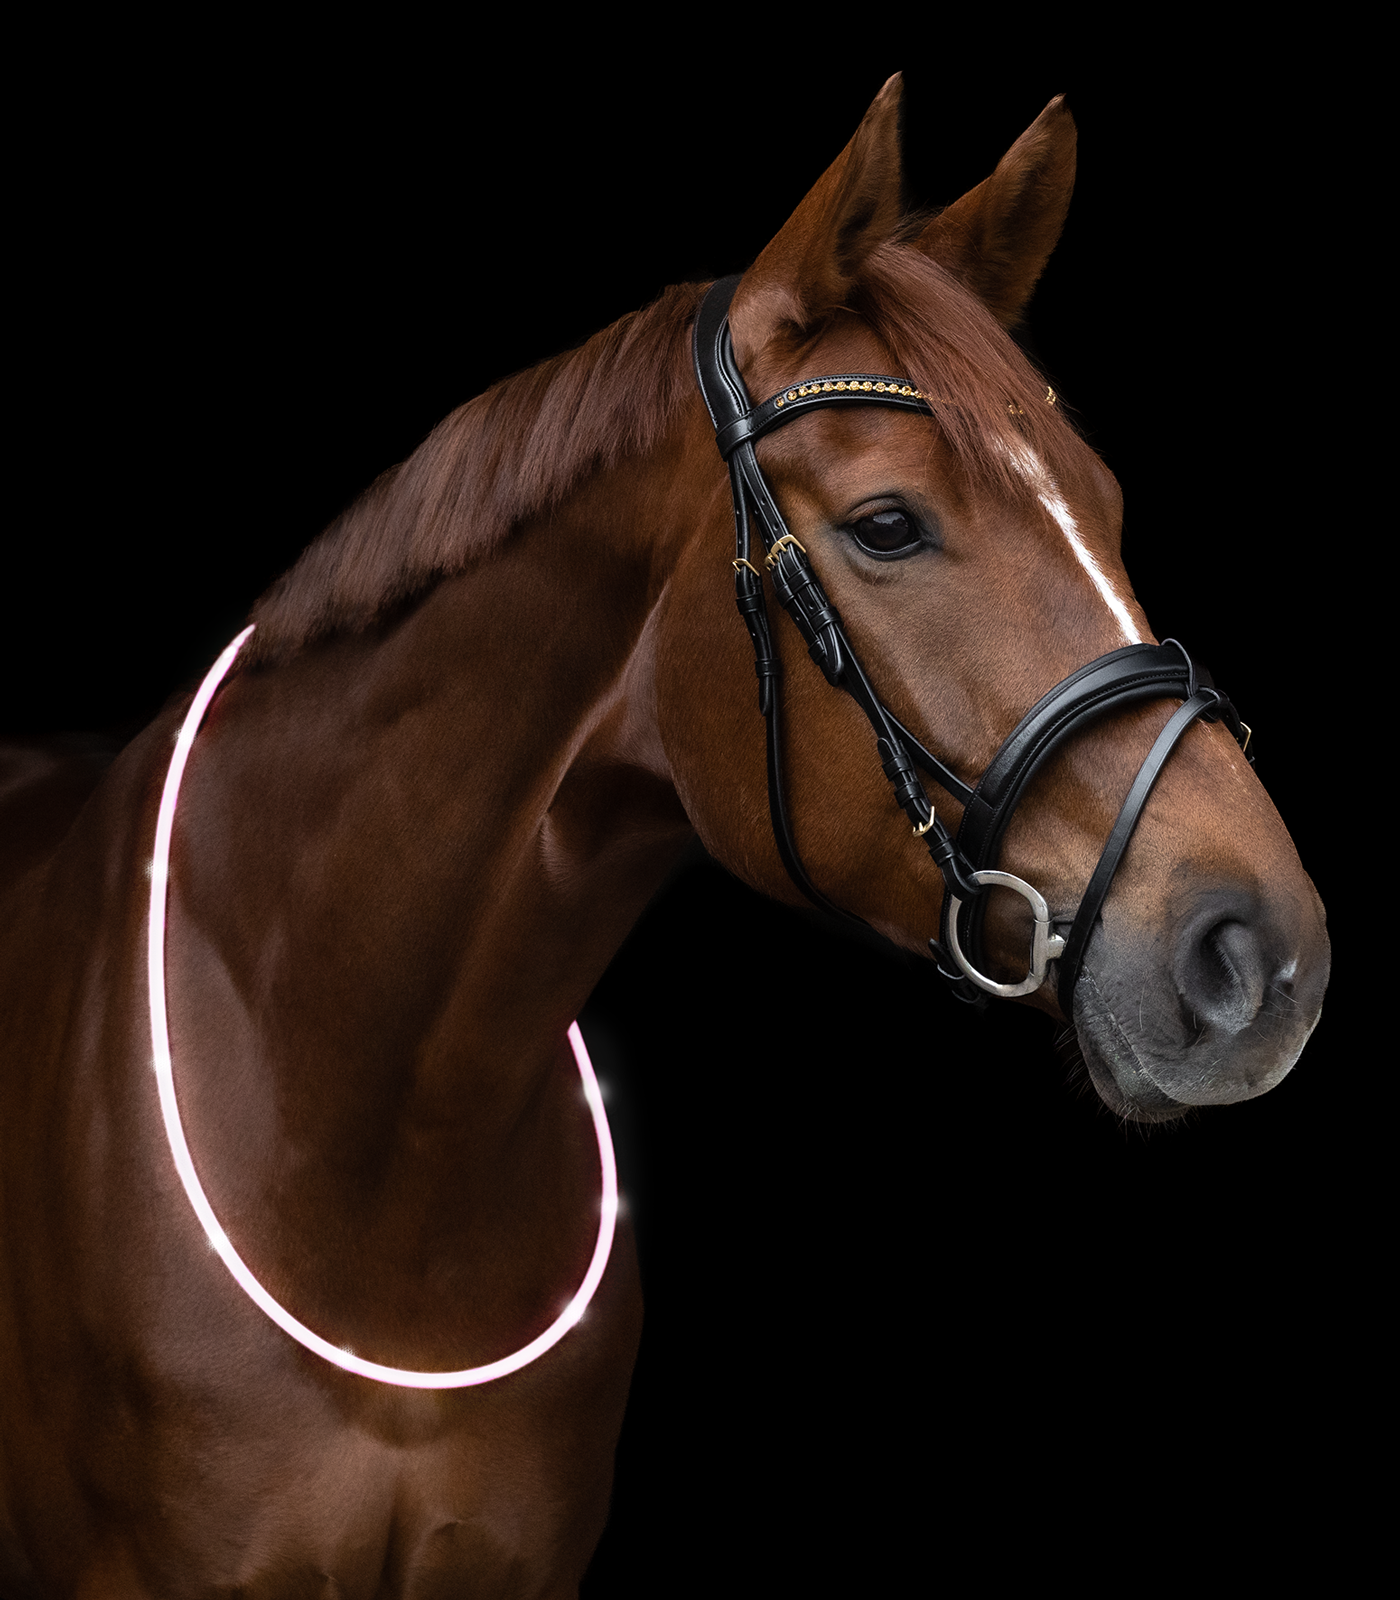   LED-Halsriemen fürs Pferd